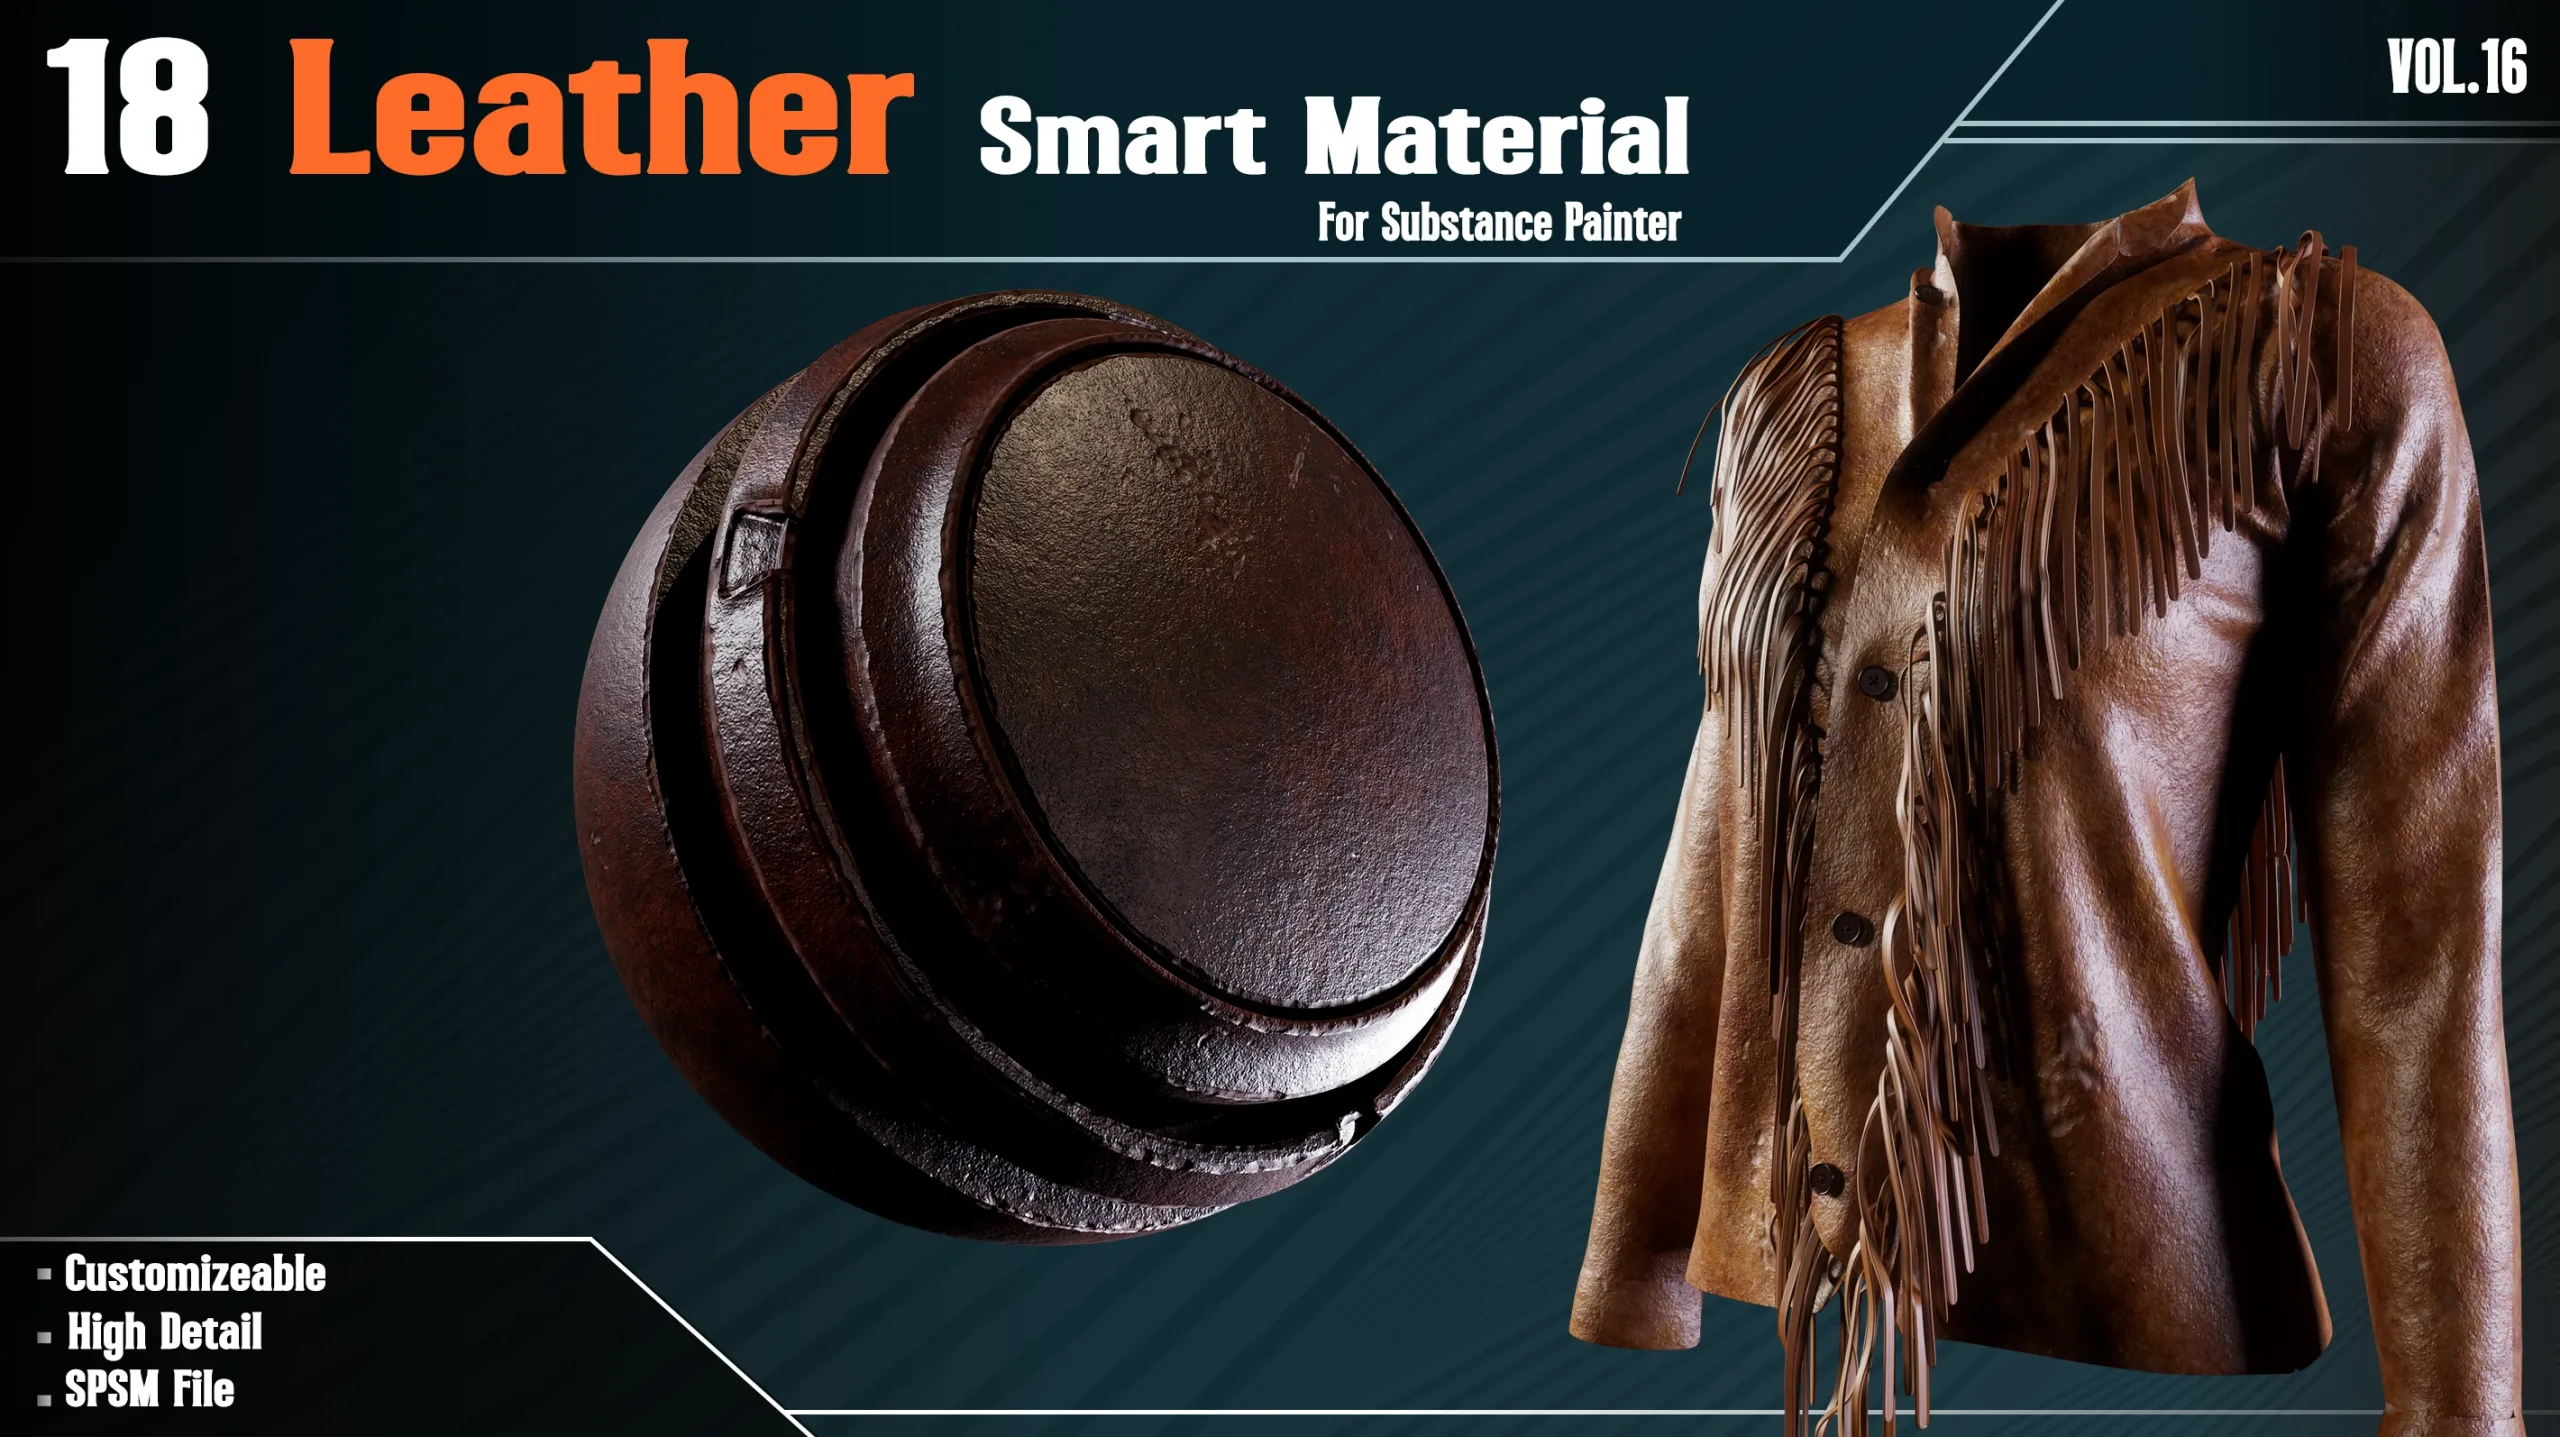 18 Leather Smart Materials - VOL 16 (spsm file) + Free Sample